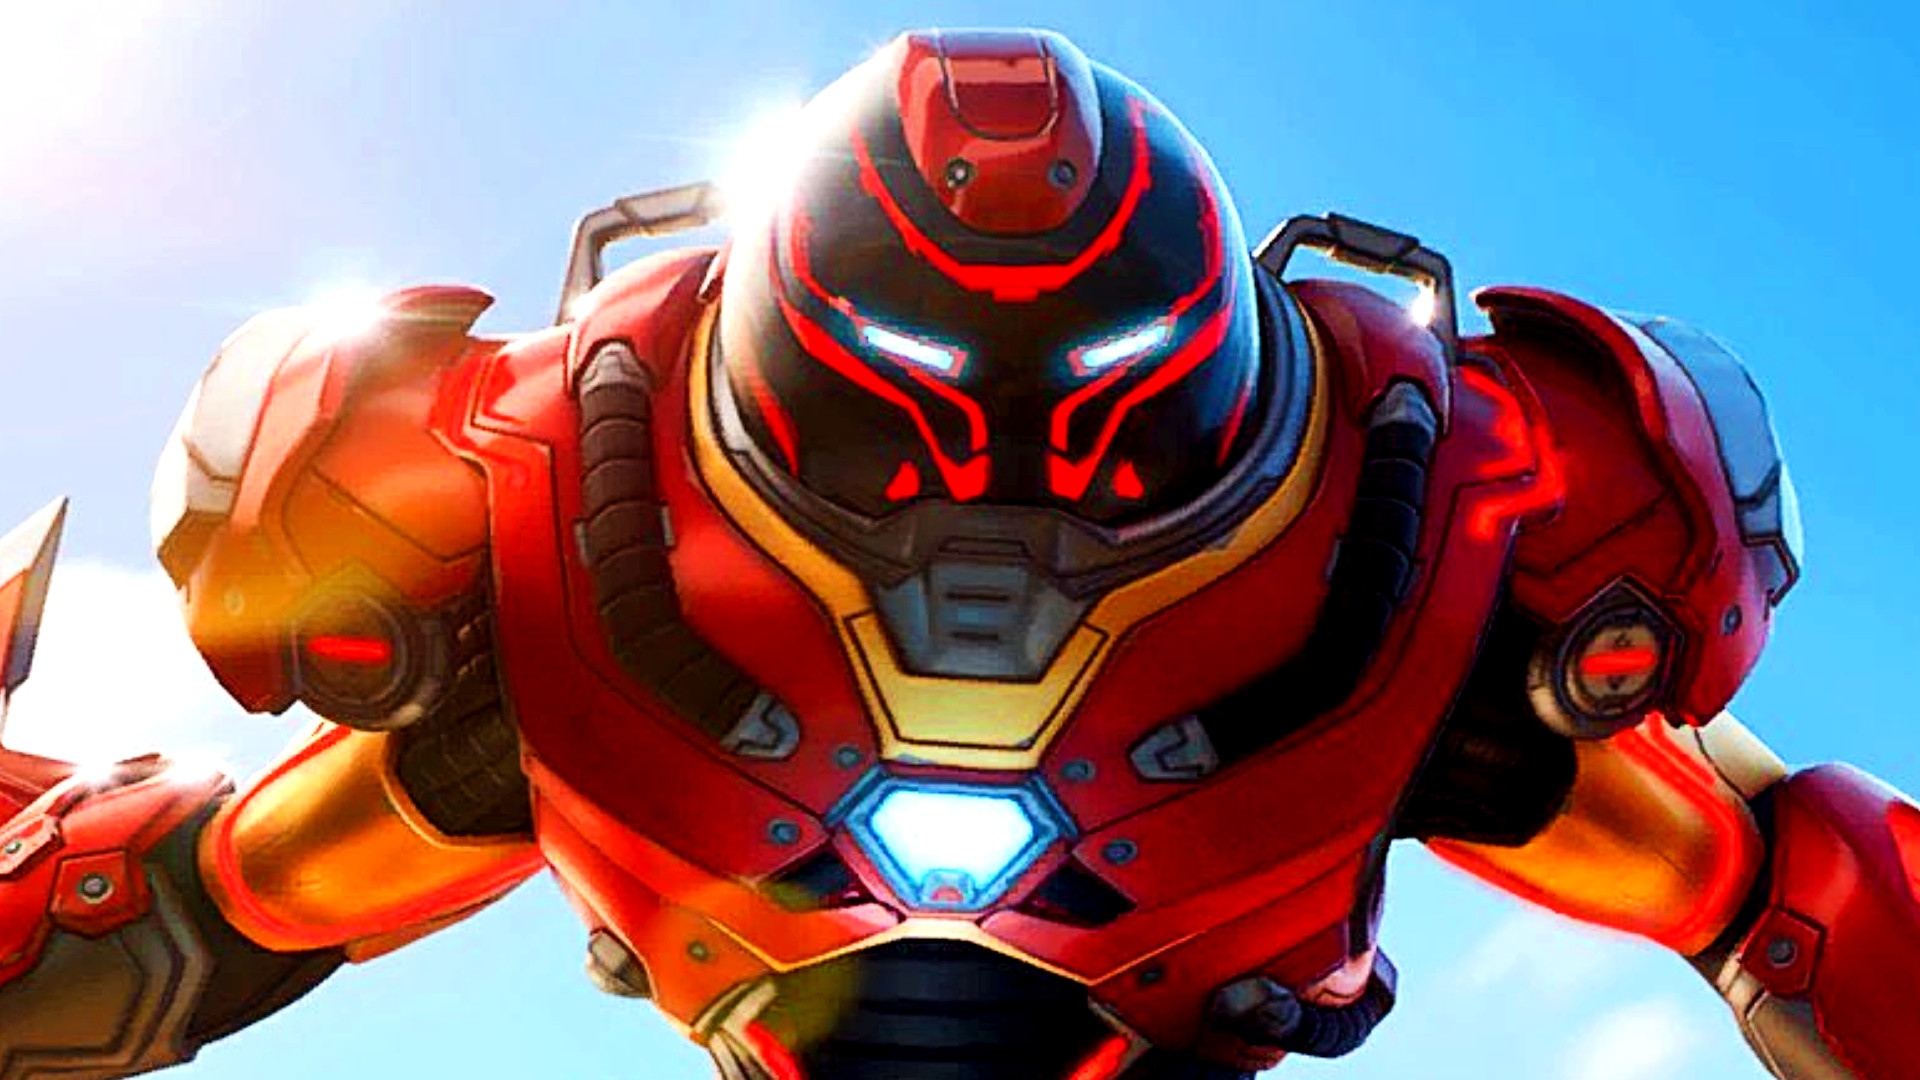 Fortnite skin leaks show Iron Man Zero suit in latest Marvel crossover